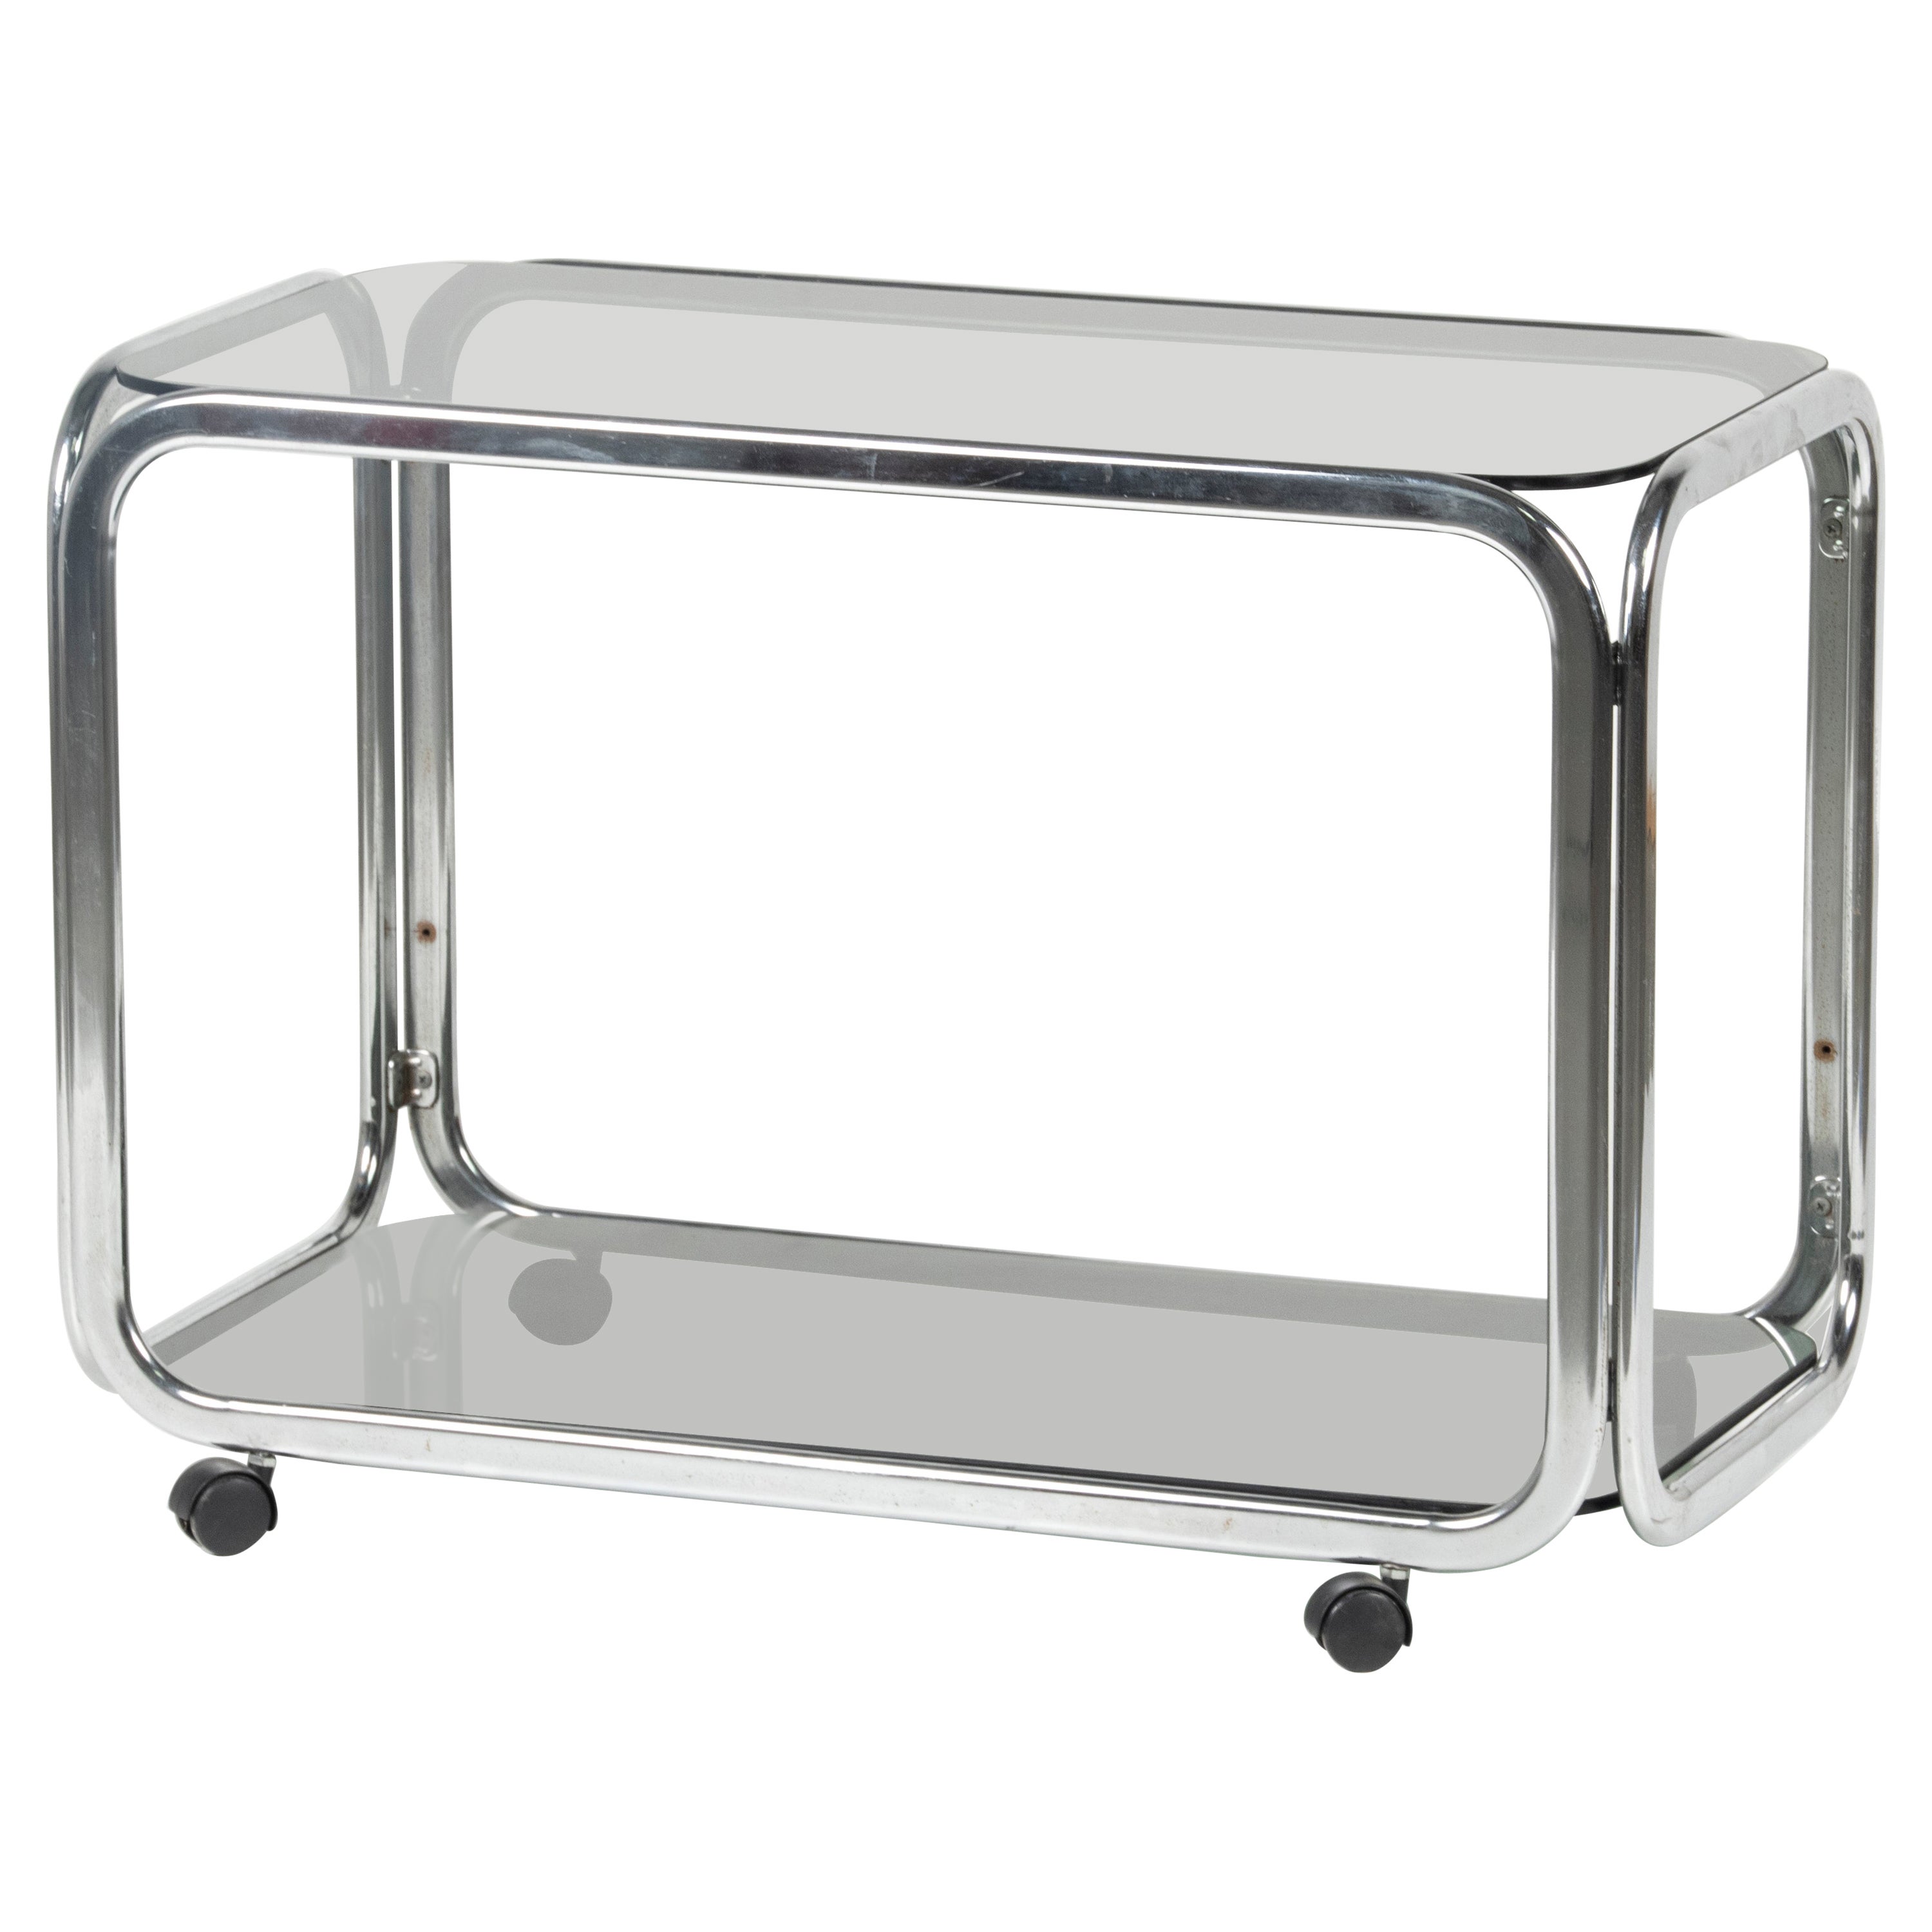 Mid-20th Century Chrome Bar Cart Smoked Glass